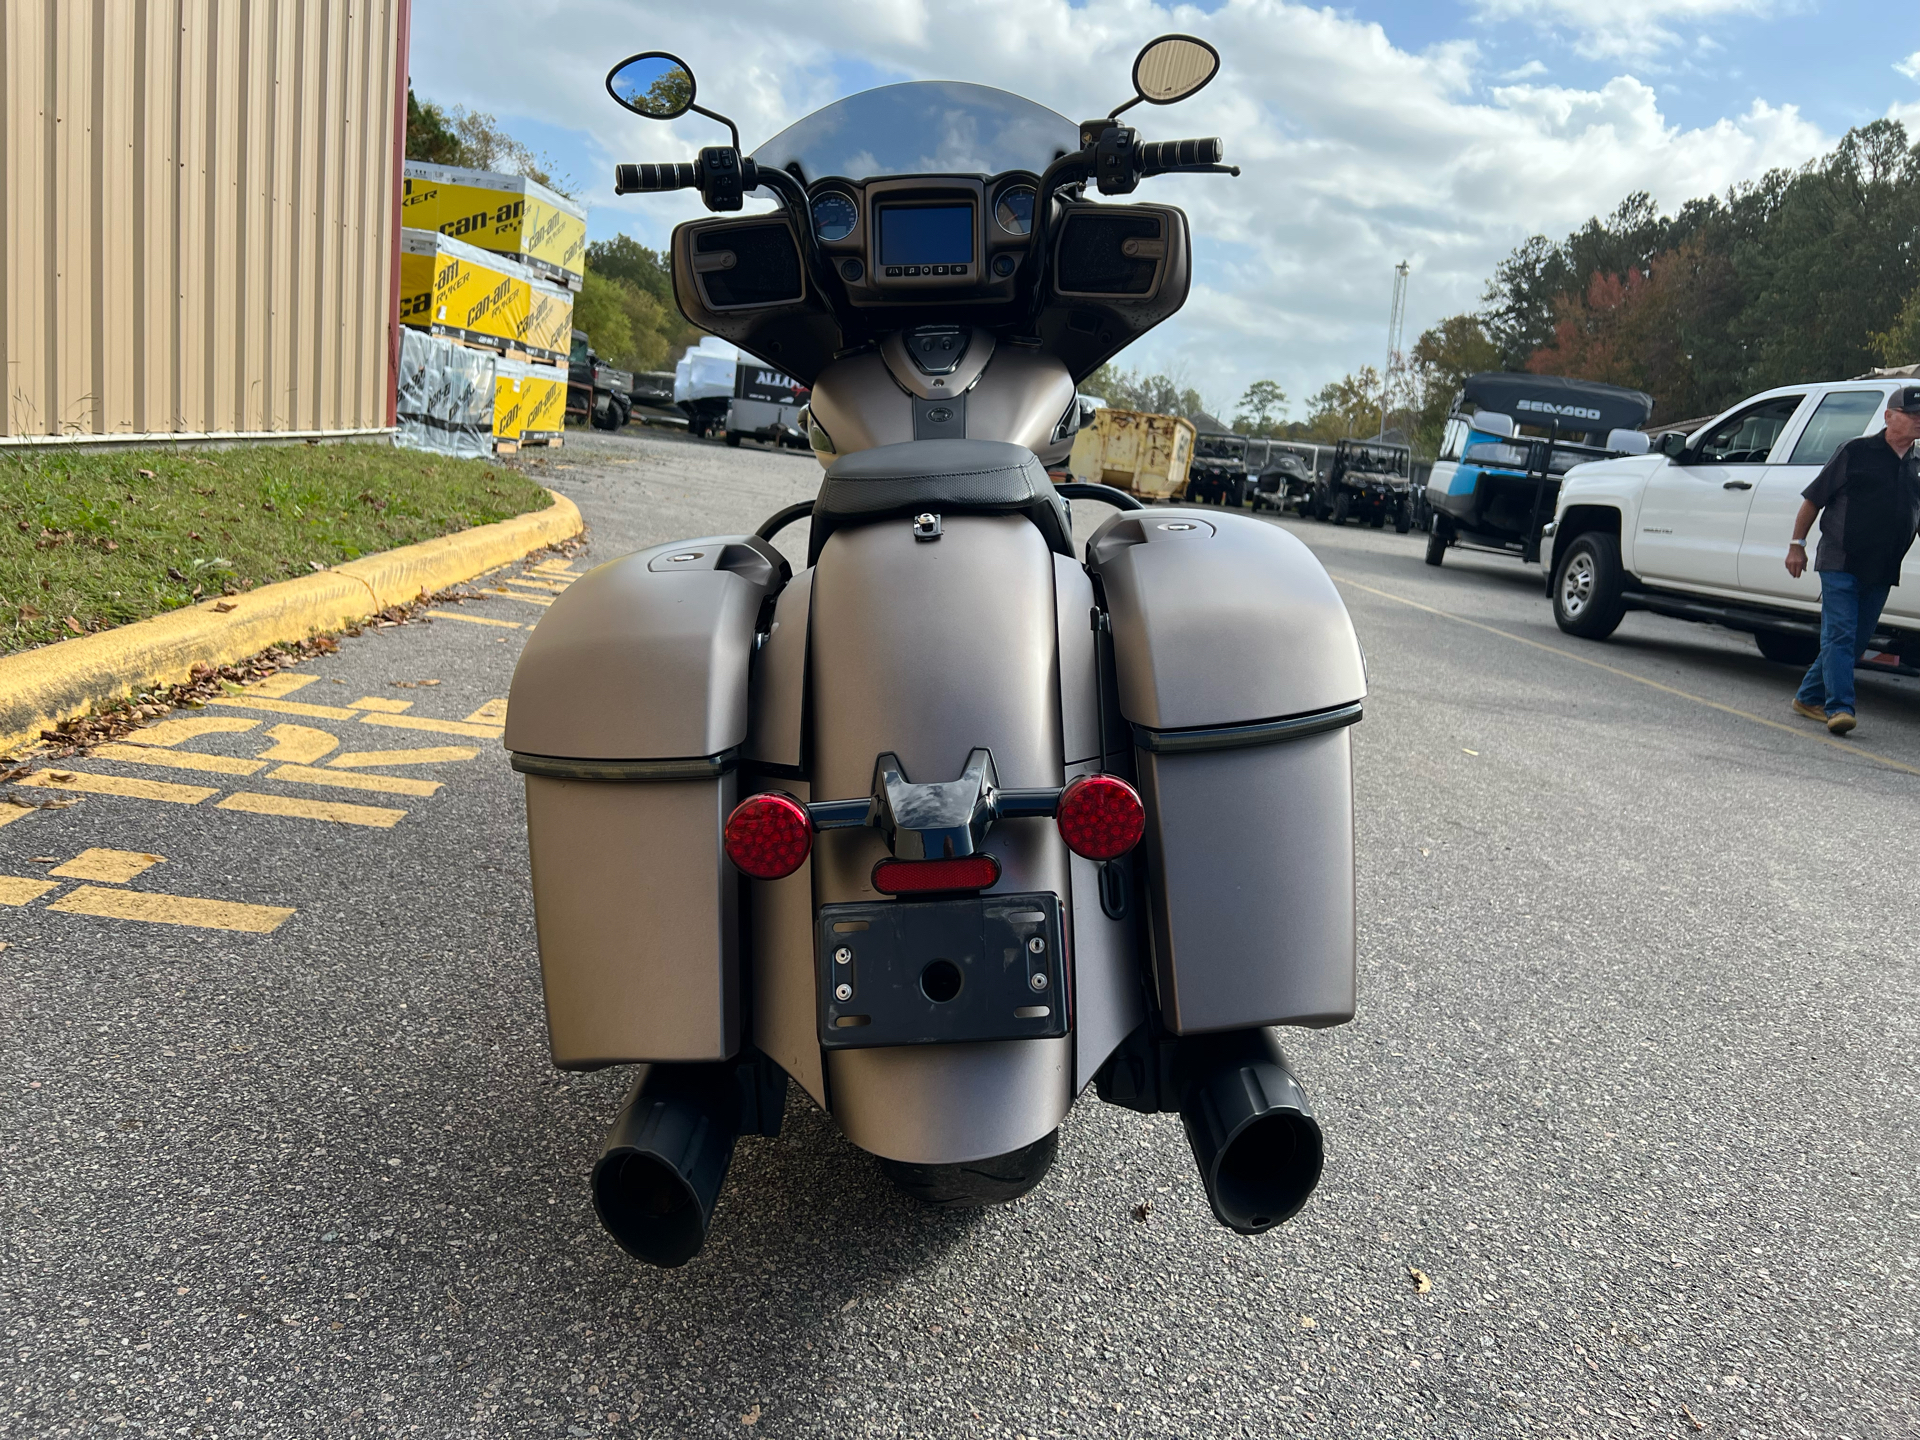 2019 Indian Motorcycle Chieftain® Dark Horse® ABS in Chesapeake, Virginia - Photo 7